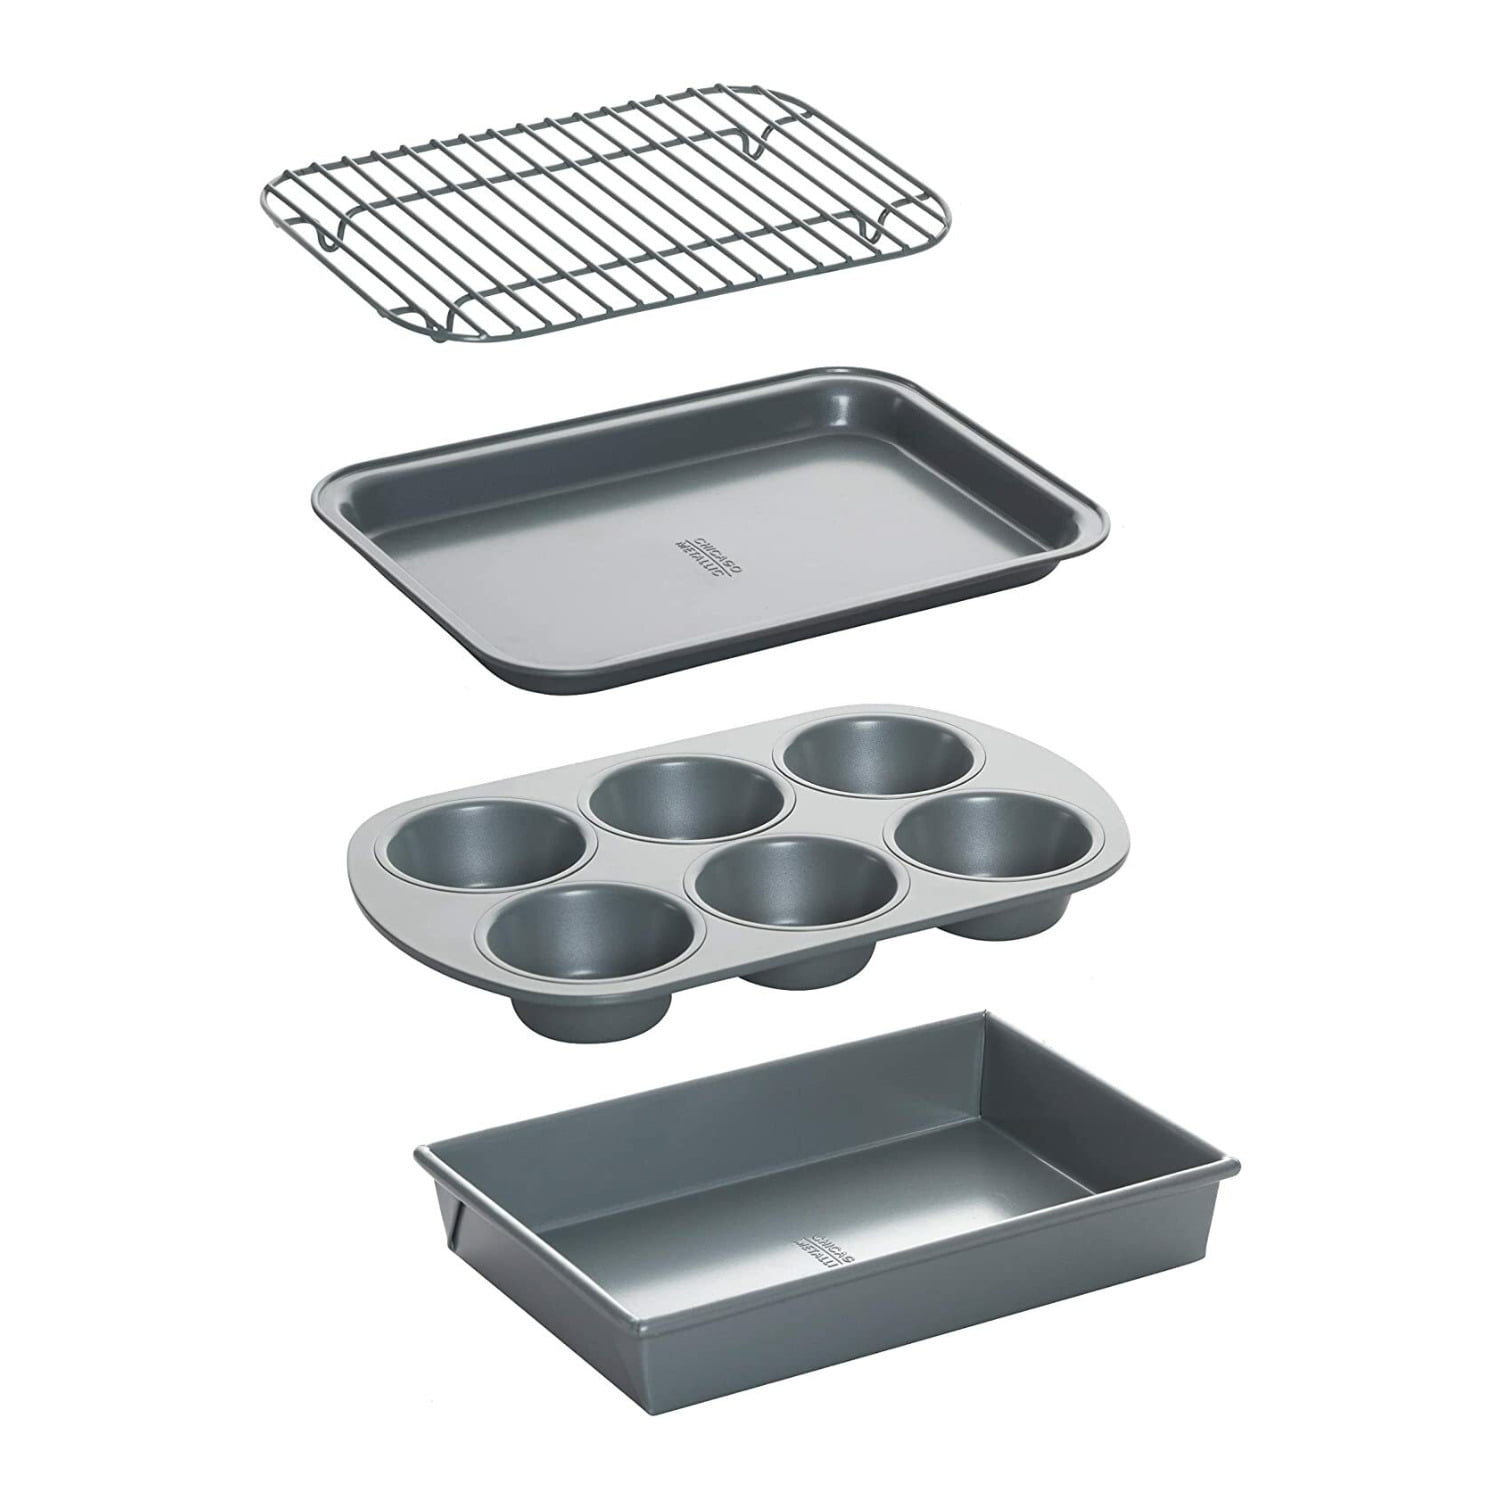 Details about   Farberware 57775 Bakeware Steel Nonstick Toaster Oven Pan Set 4-Piece Baking Se 